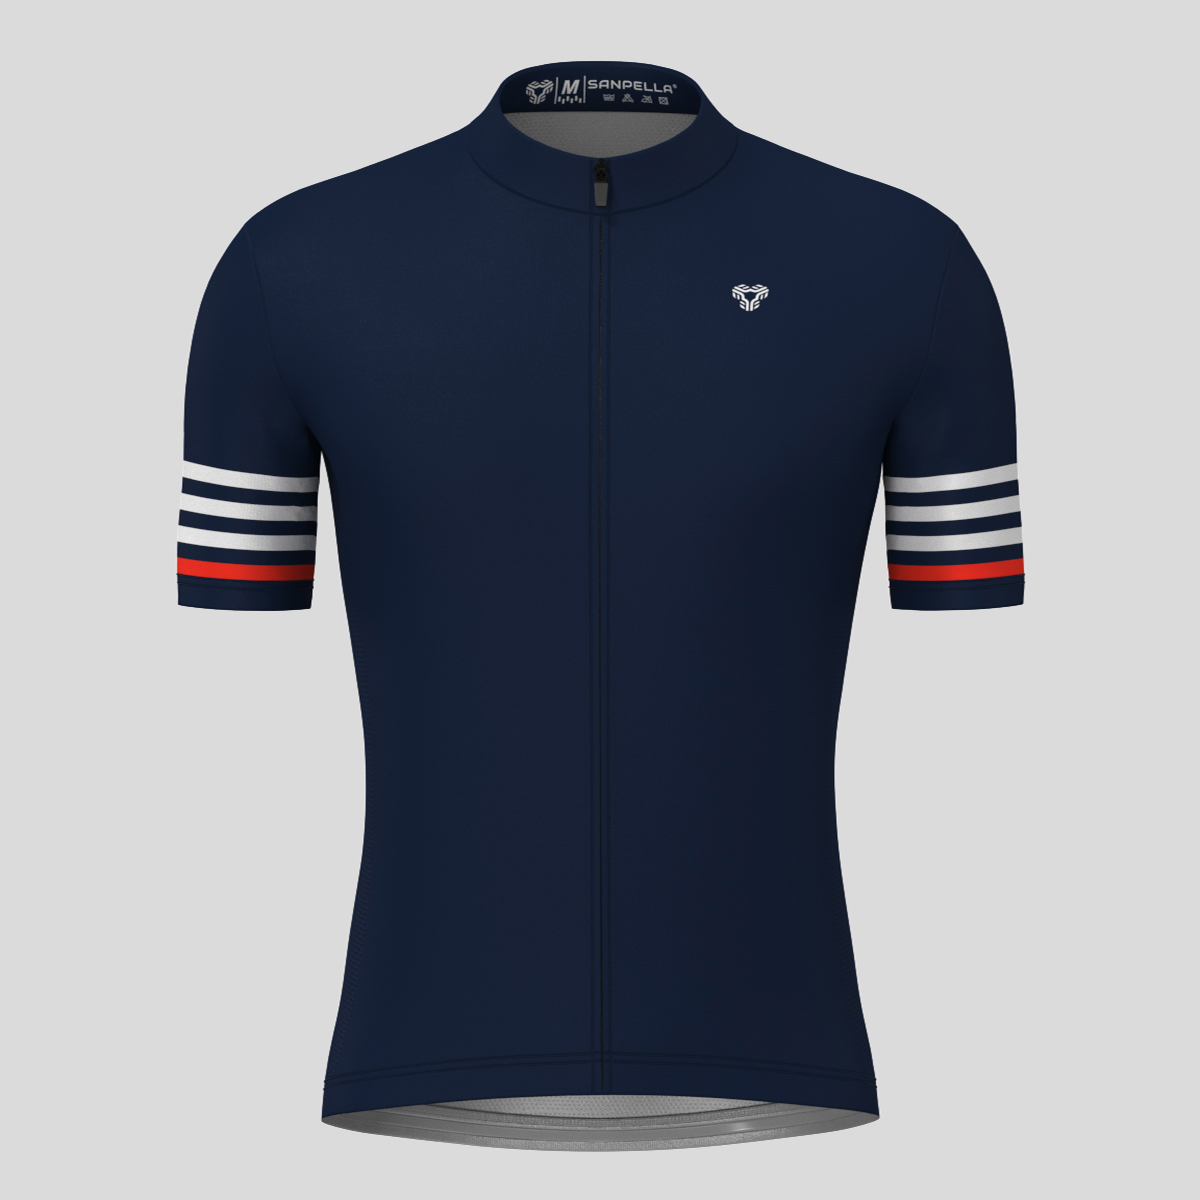 Minimal Stripes Men's Cycling Jersey - Navy/White/Red